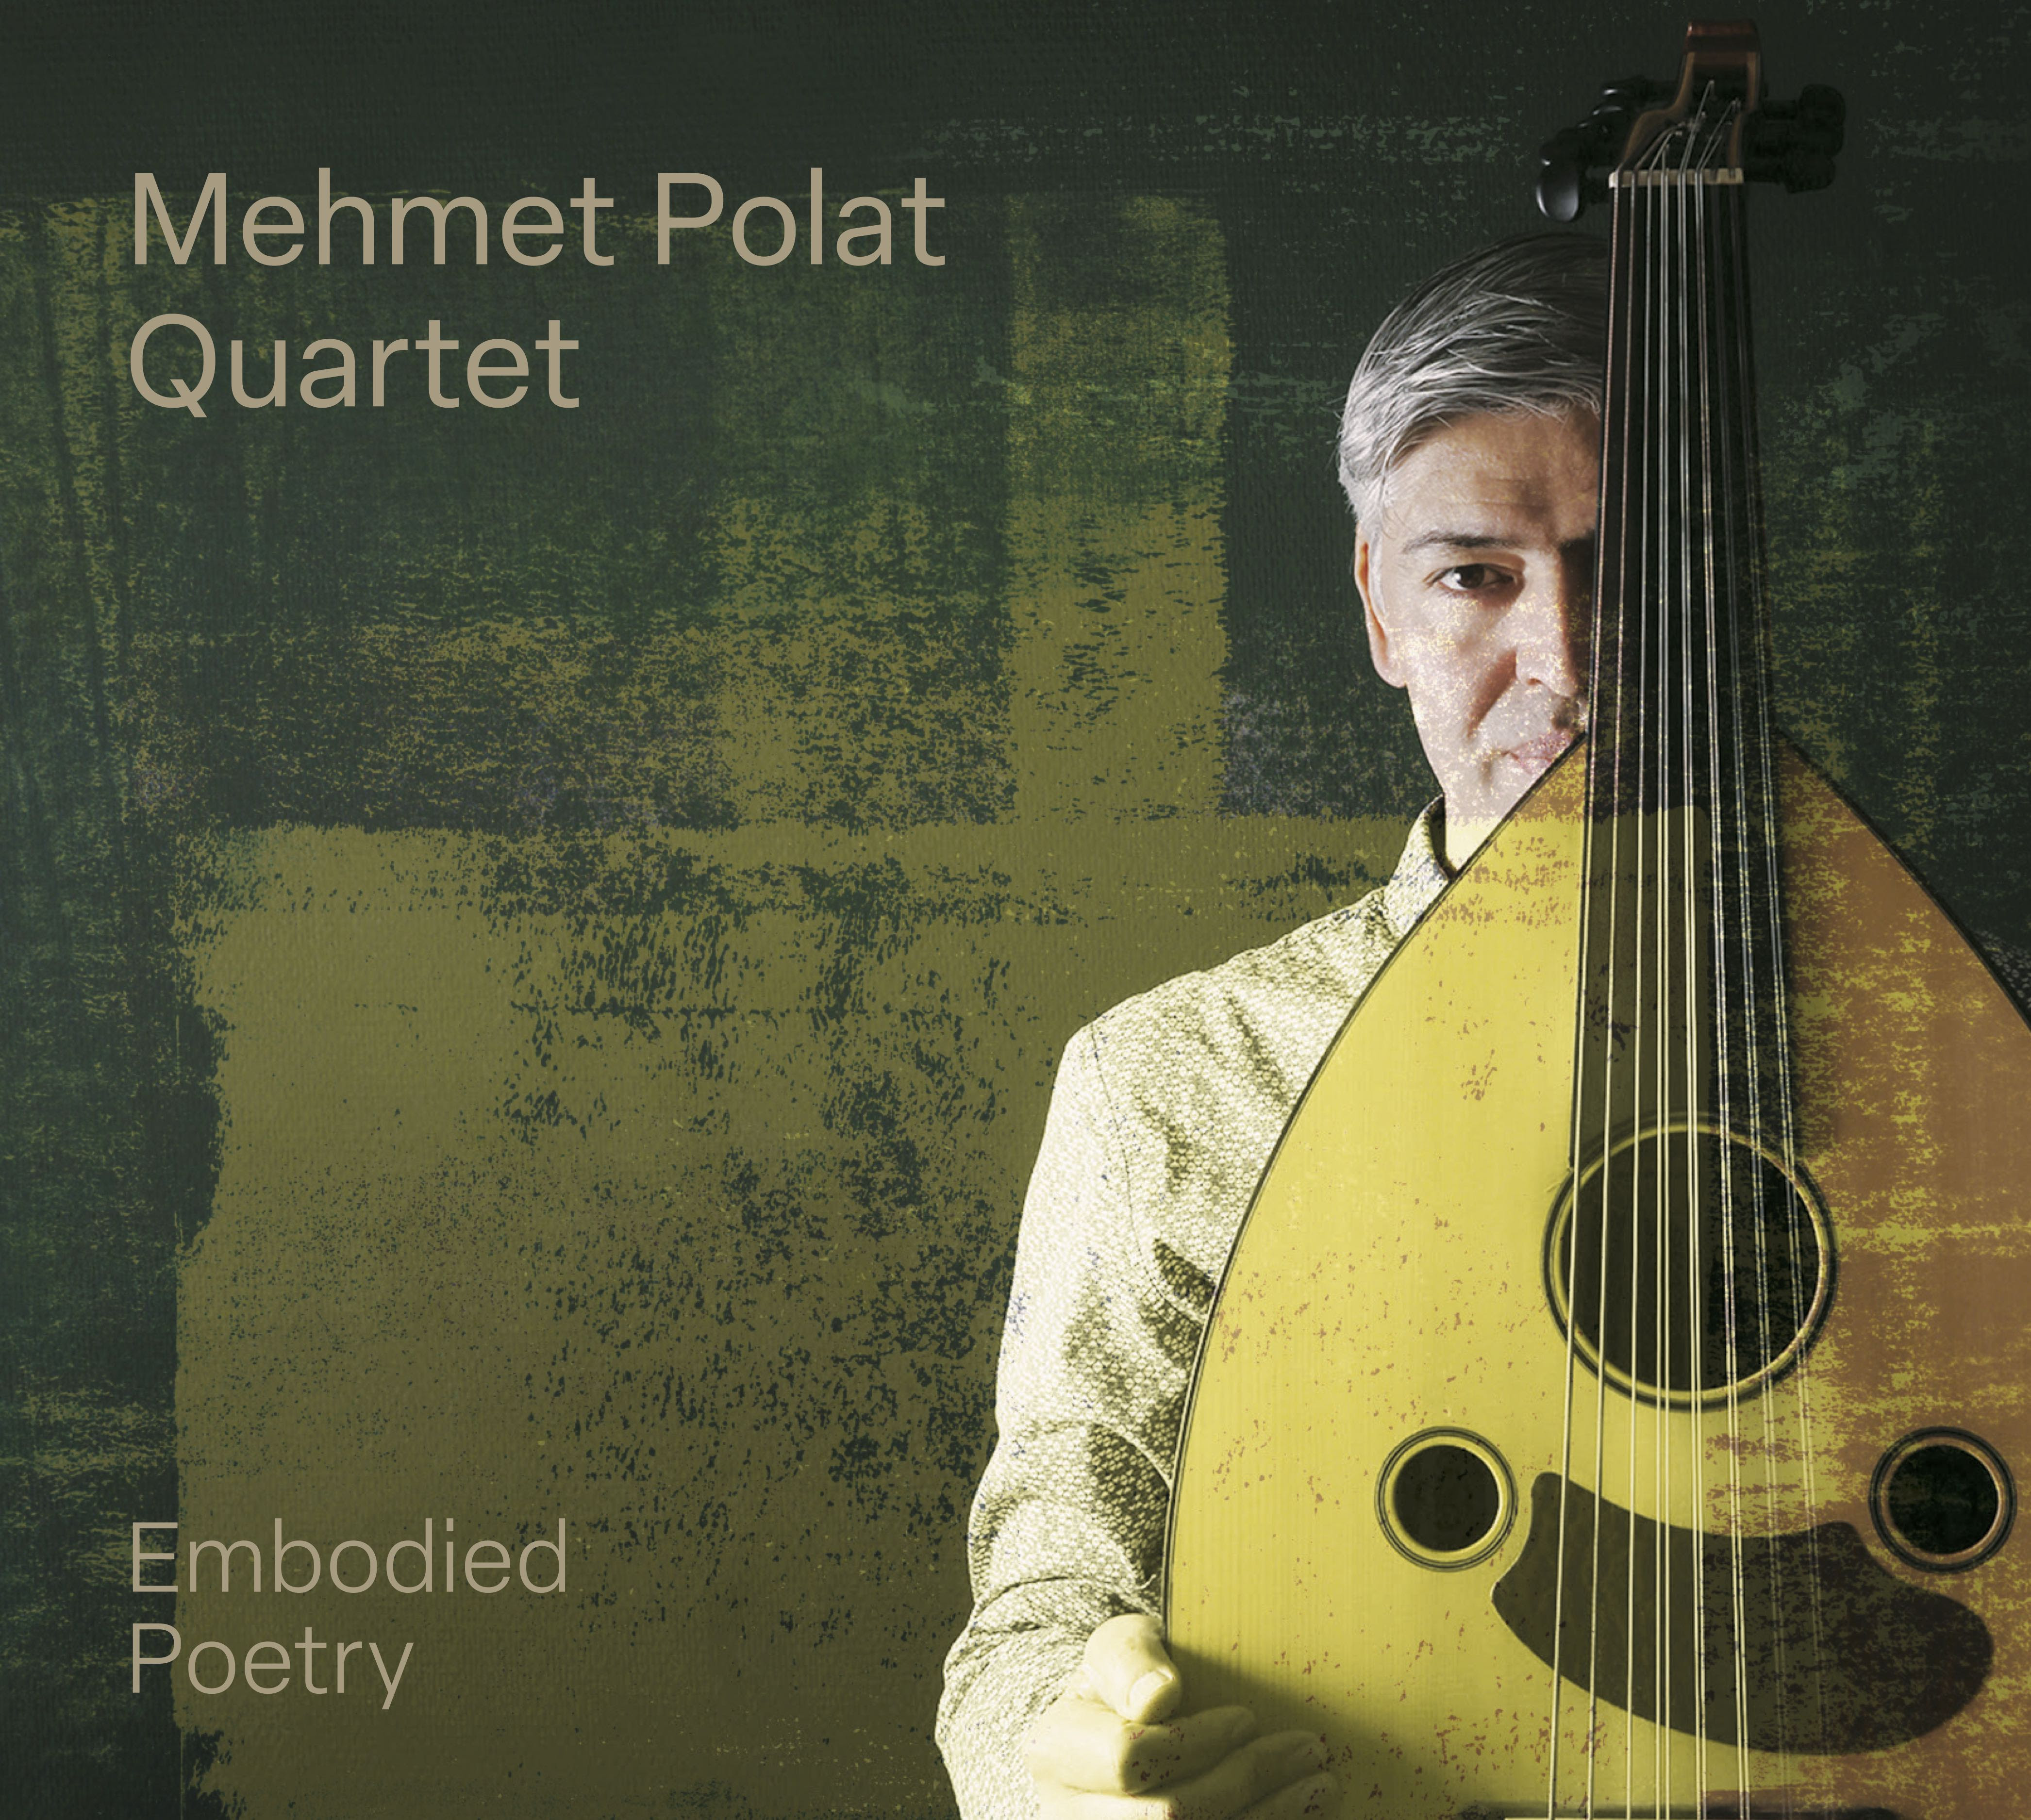 Mehmet Polat Embodied Poetry